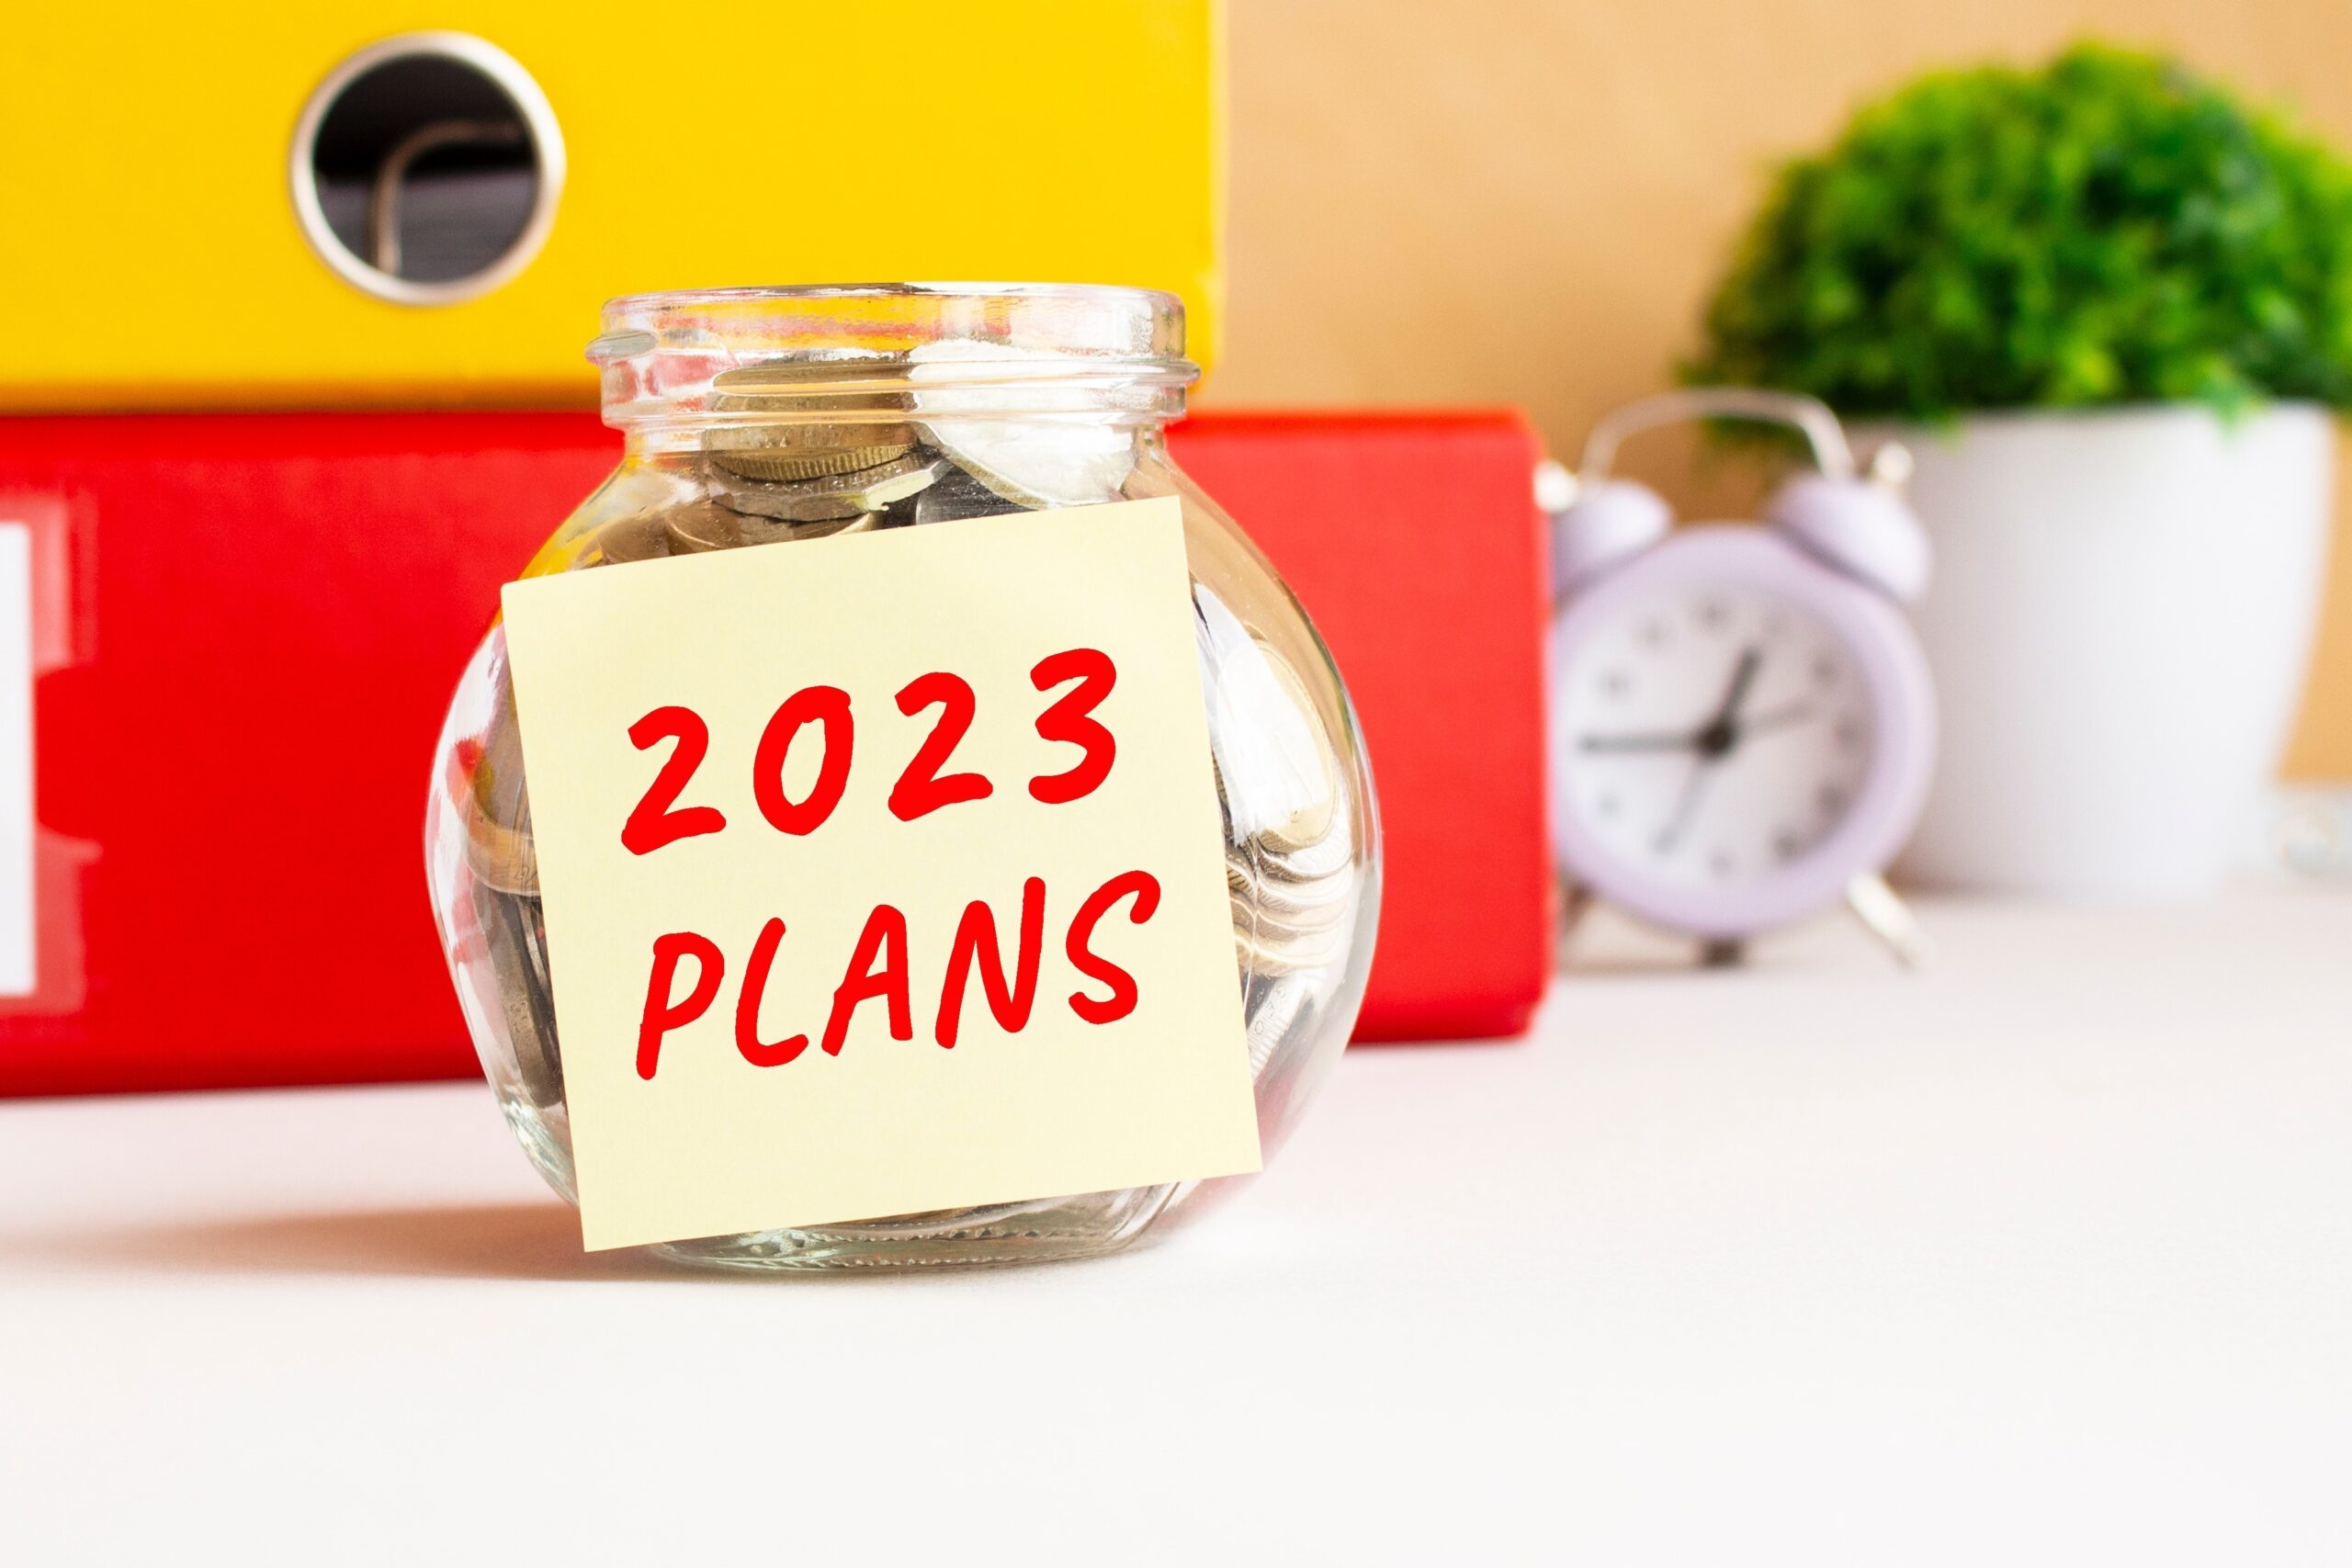 '2023 Plans' post-it note on money jar